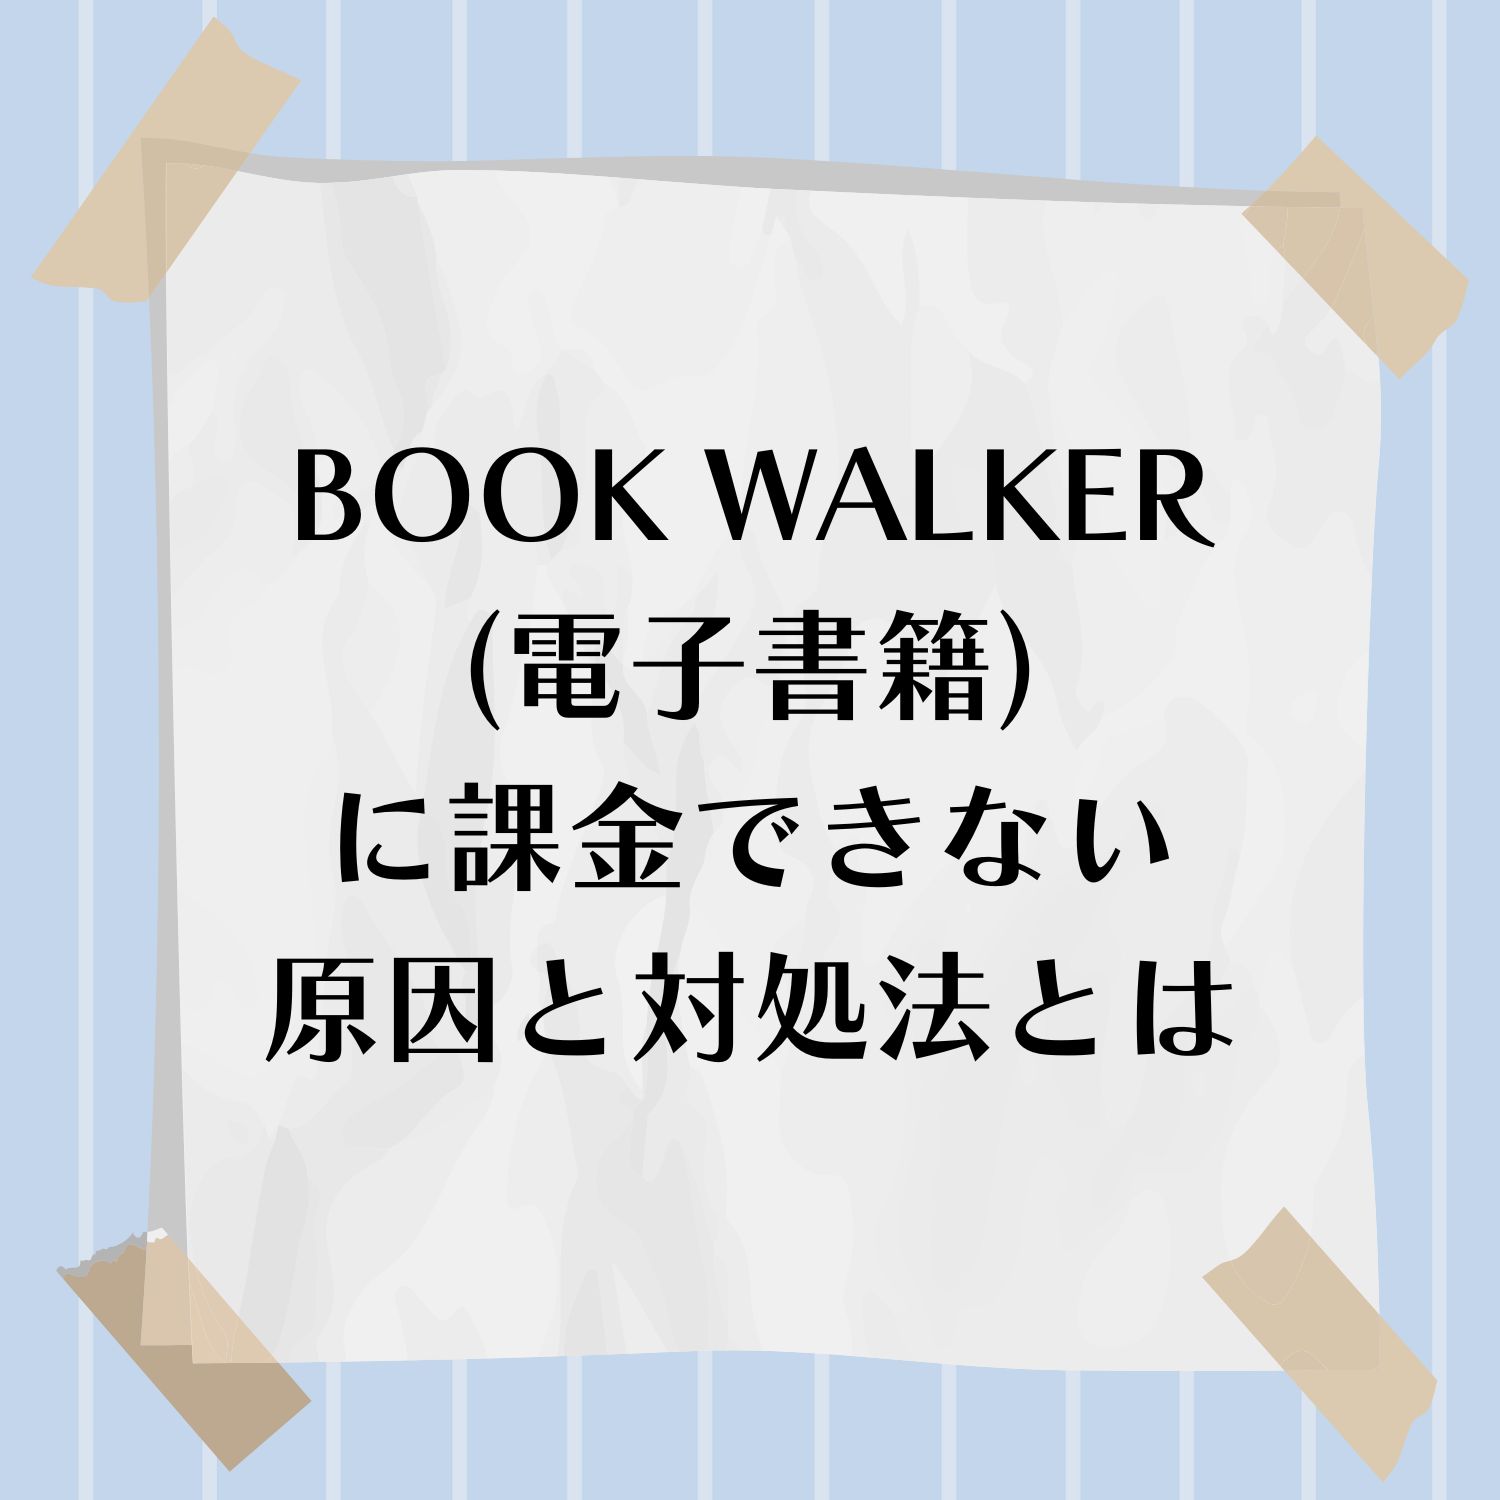 BOOK WALKER (電子書籍）に課金できない原因と対処法とは